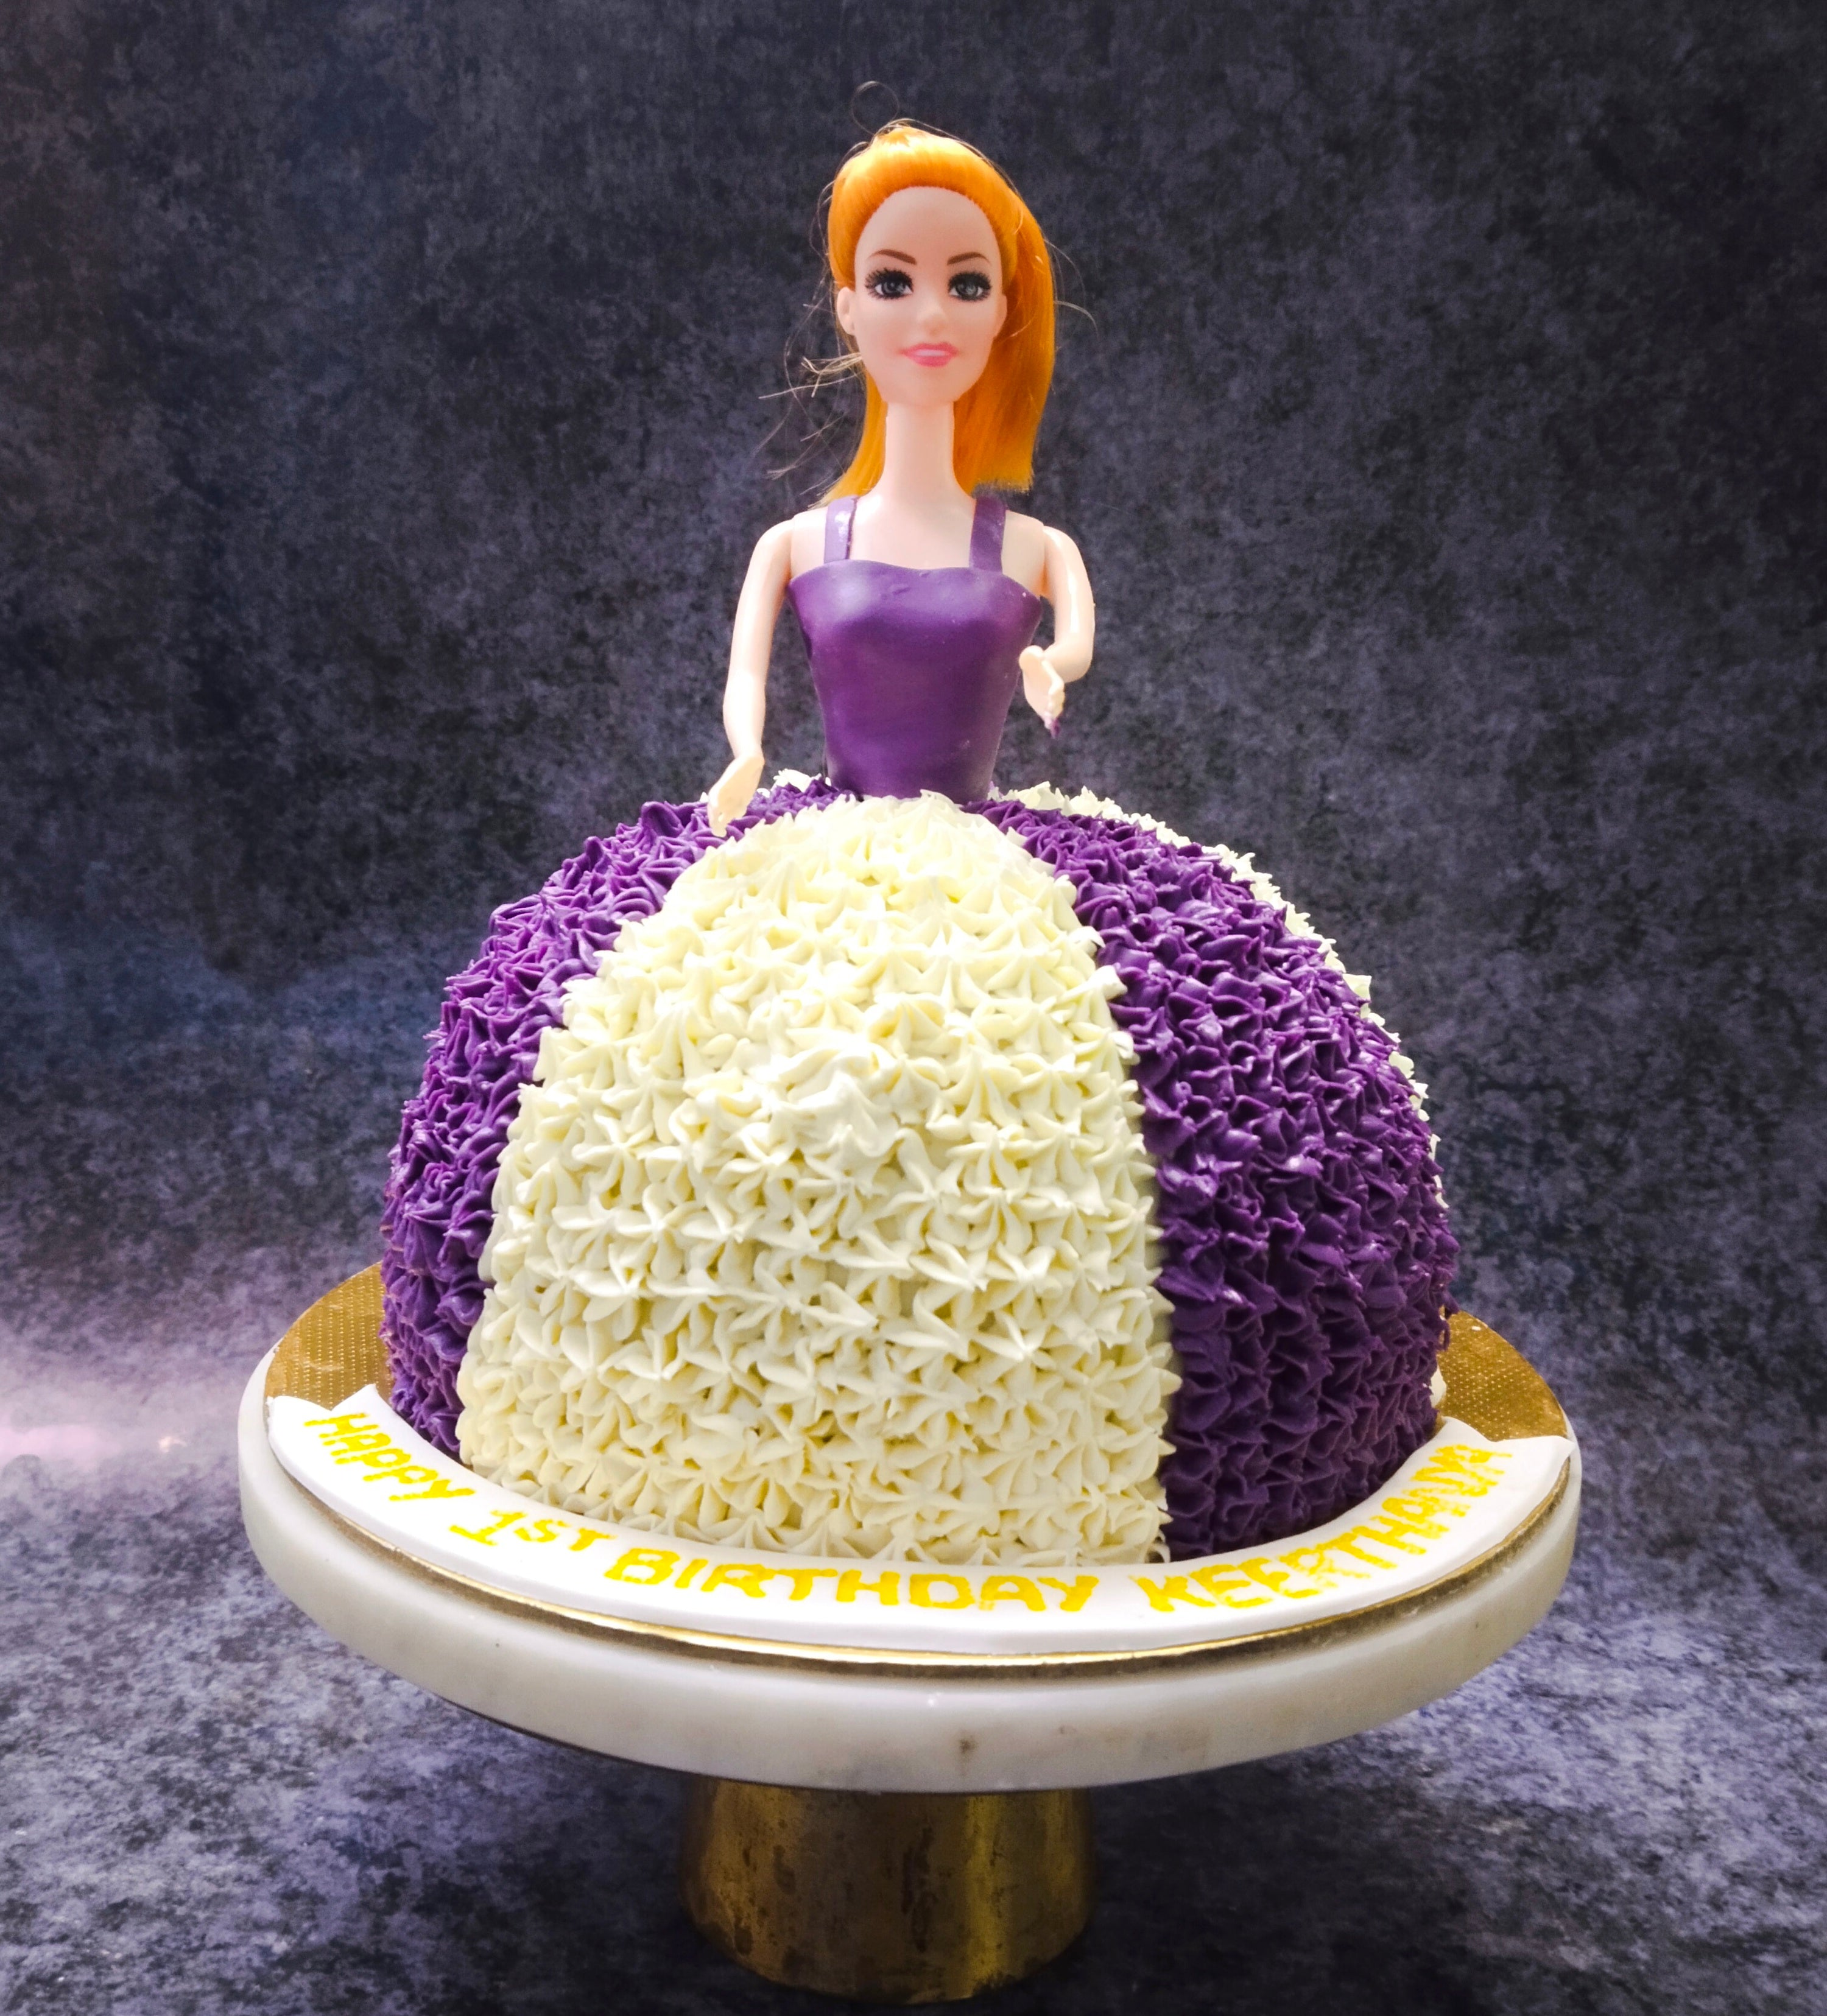 Eshi cakes  Today Birthday cake order Doll theme  Facebook